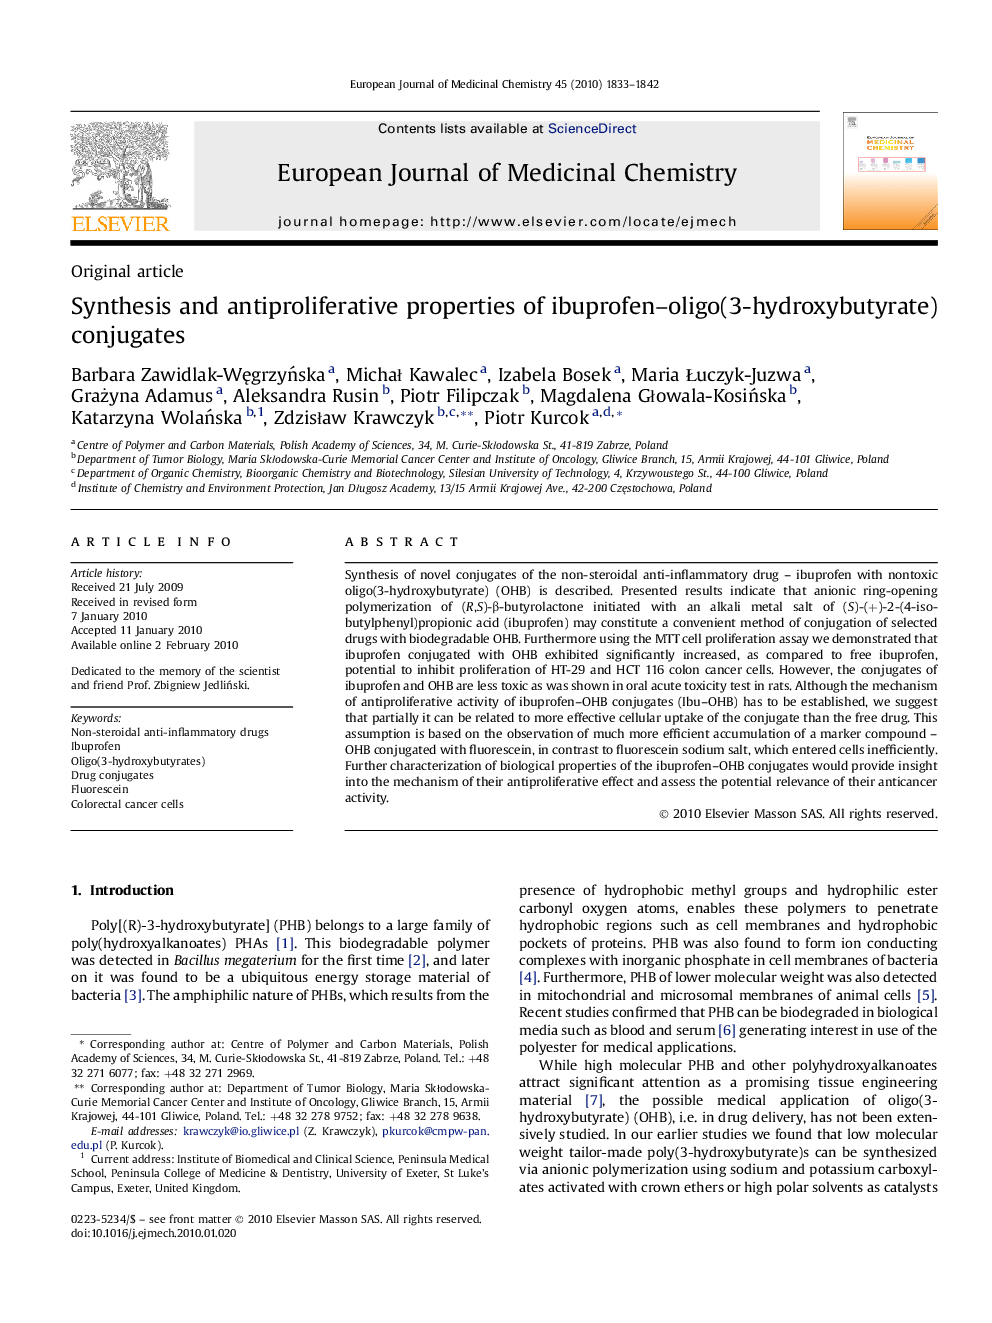 Synthesis and antiproliferative properties of ibuprofen–oligo(3-hydroxybutyrate) conjugates